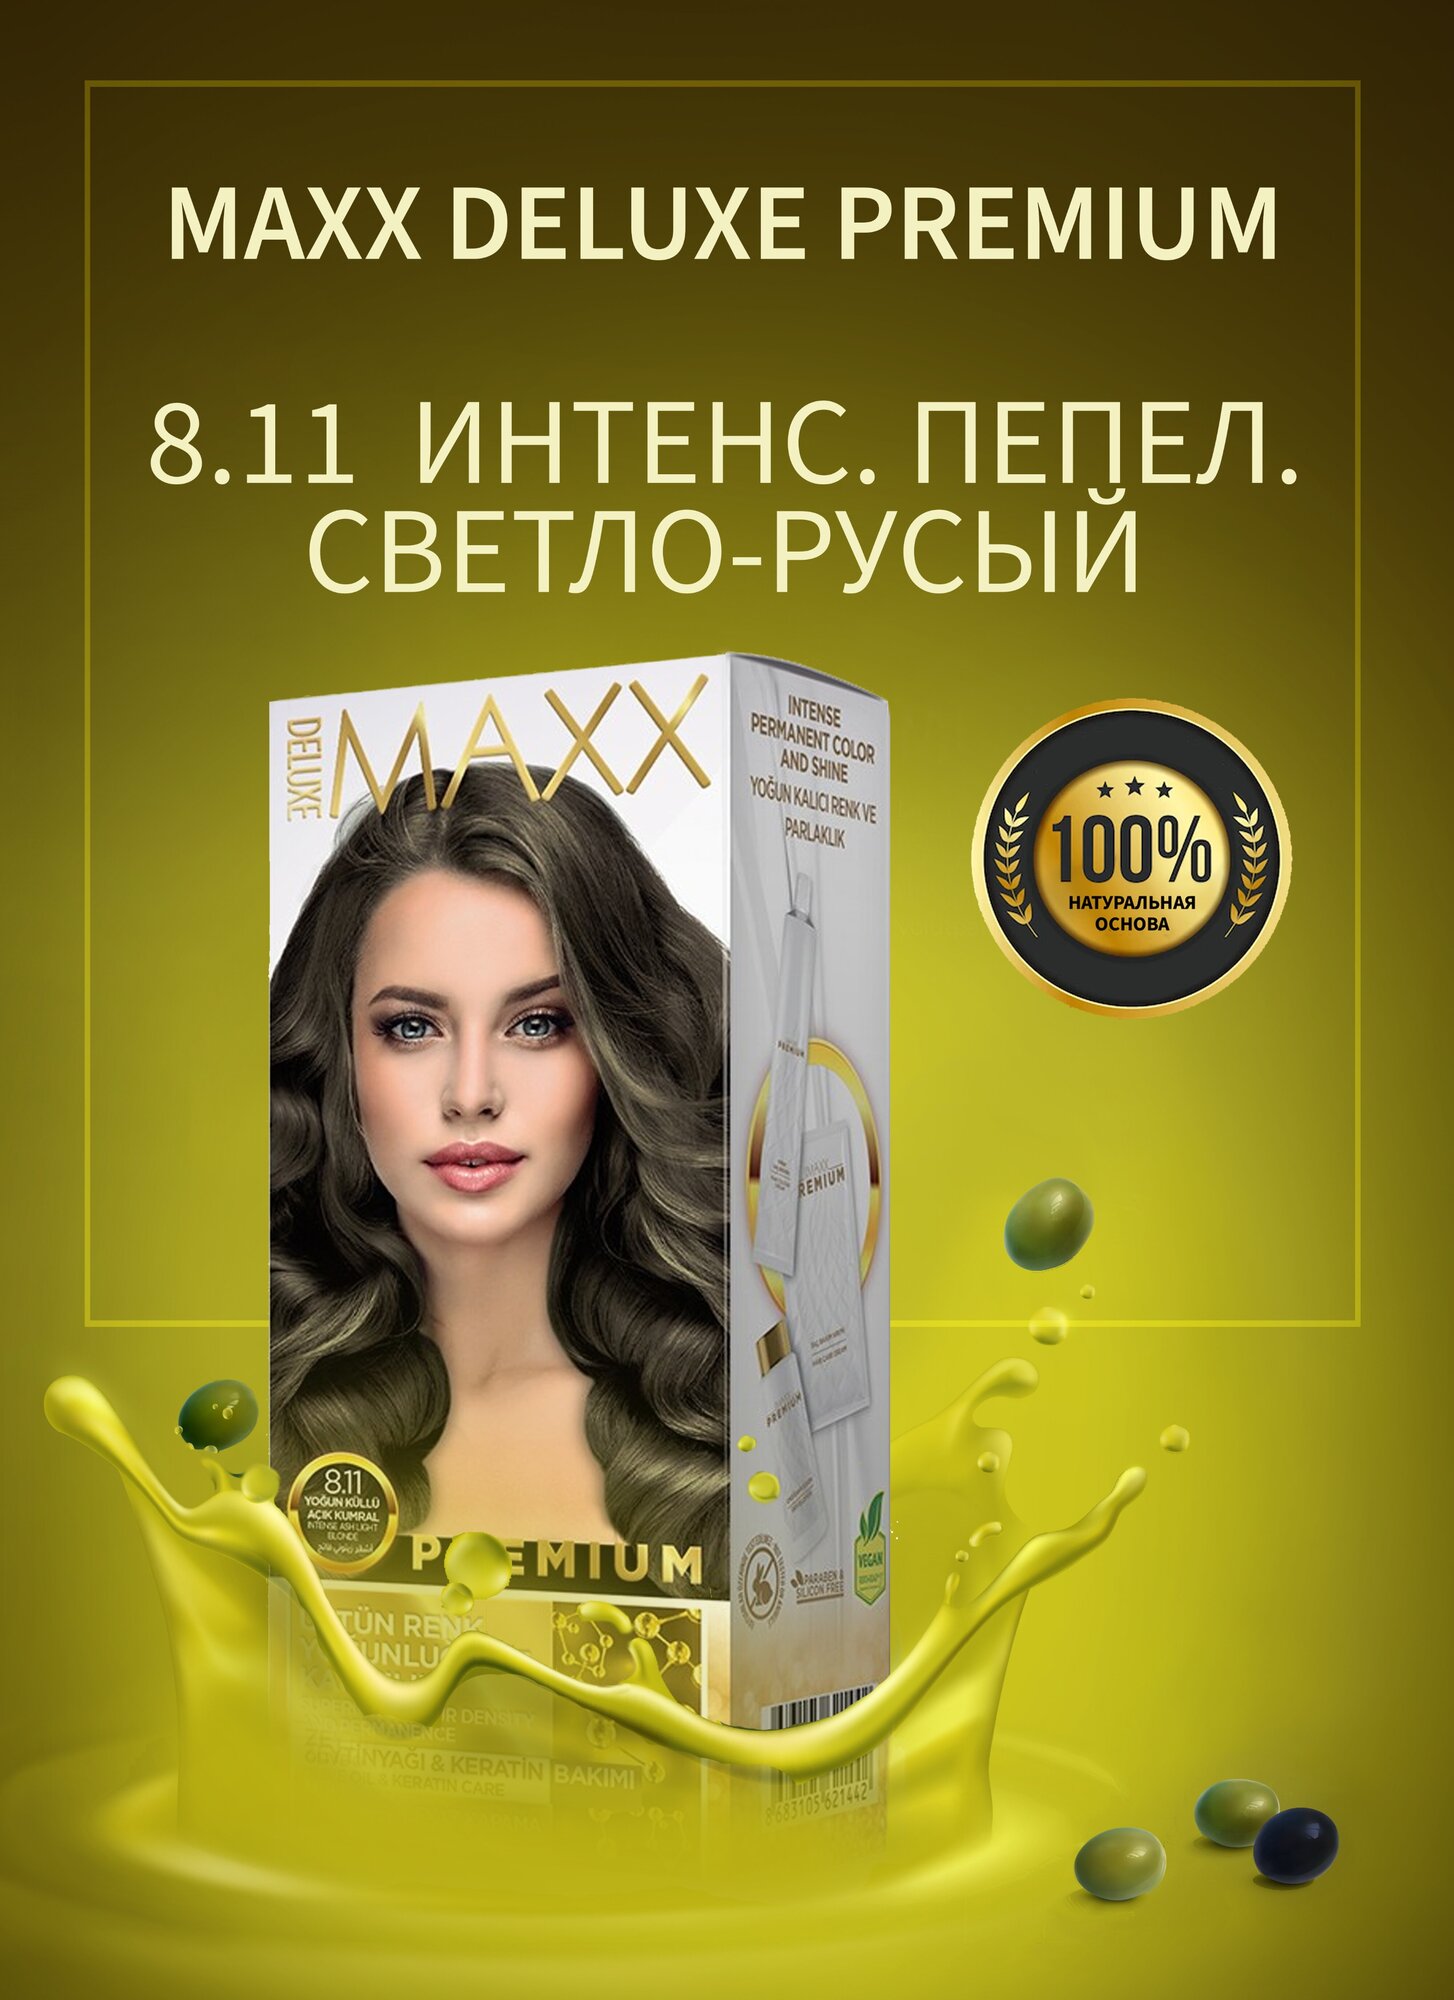 Краска для окрашивания волос MAXX DELUXE PREMIUM HAIR DYE KIT 8.11 Интенс. пепельно-русый